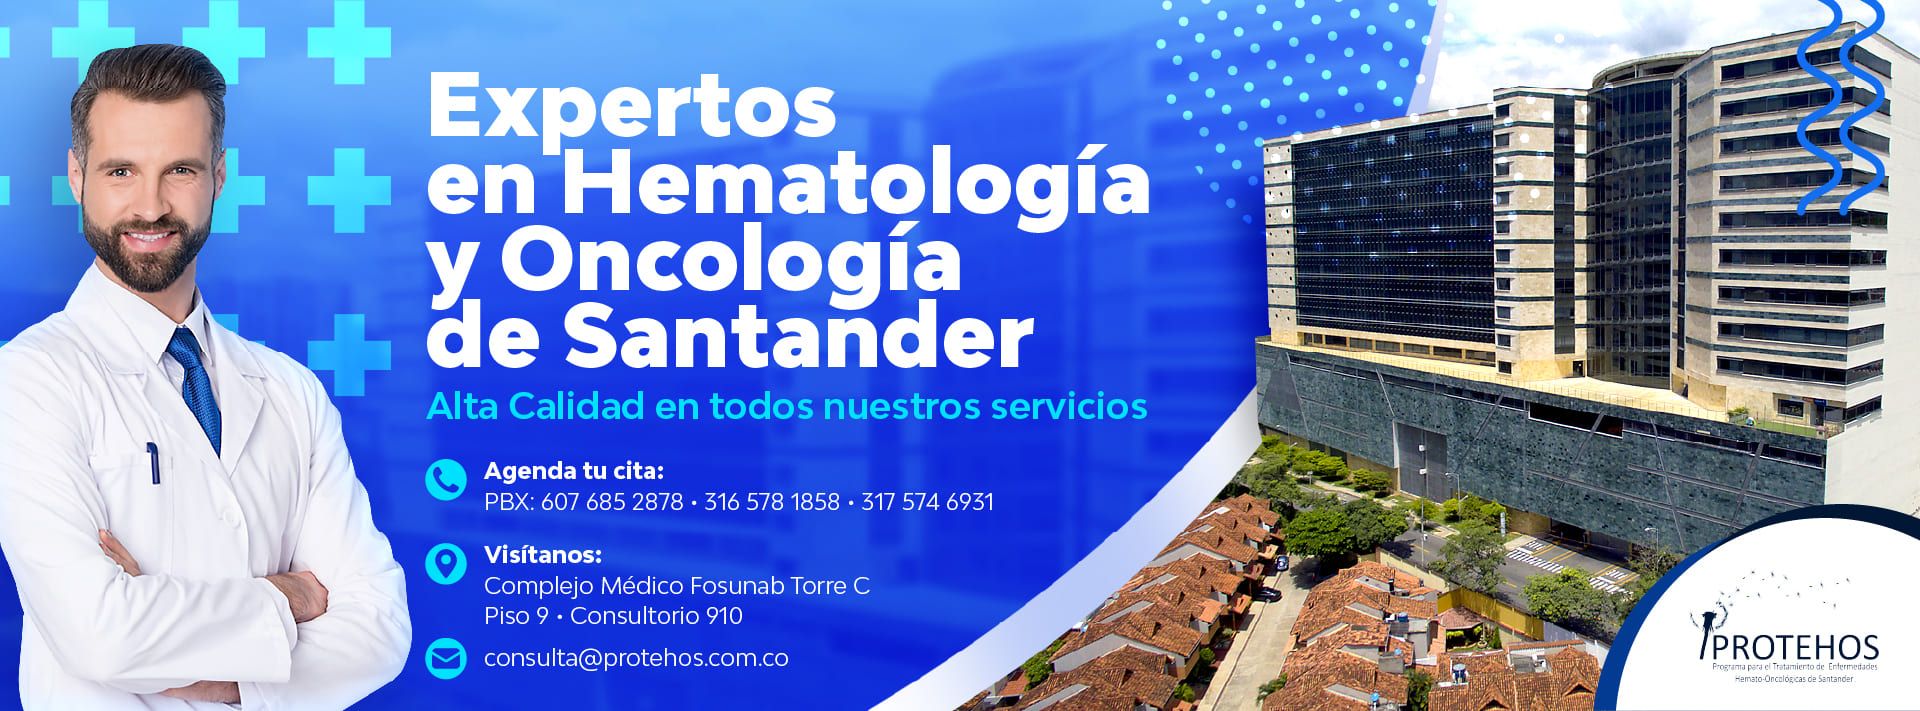 protehos_hematologia